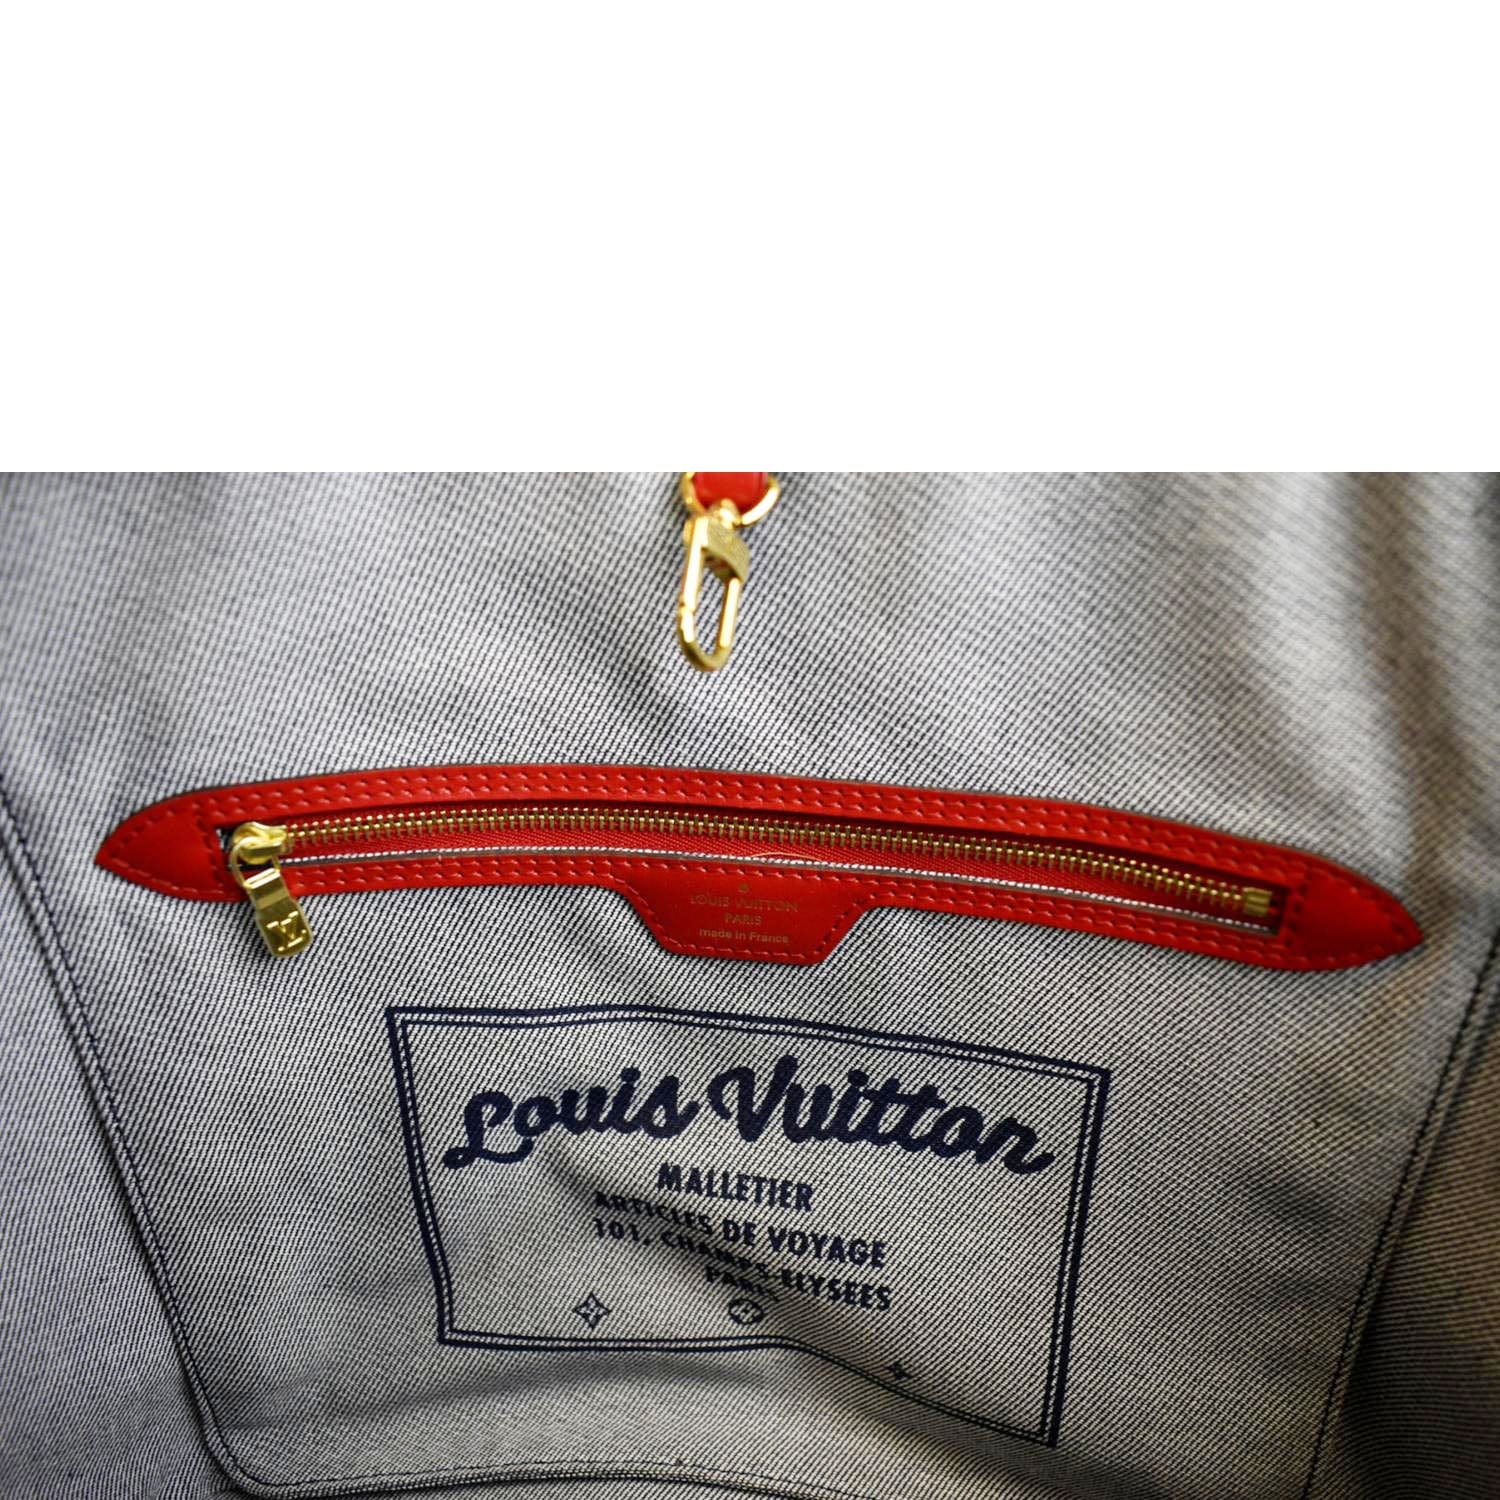 Louis Vuitton Denim Patchwork Neverfull MM Tote, Louis Vuitton Handbags